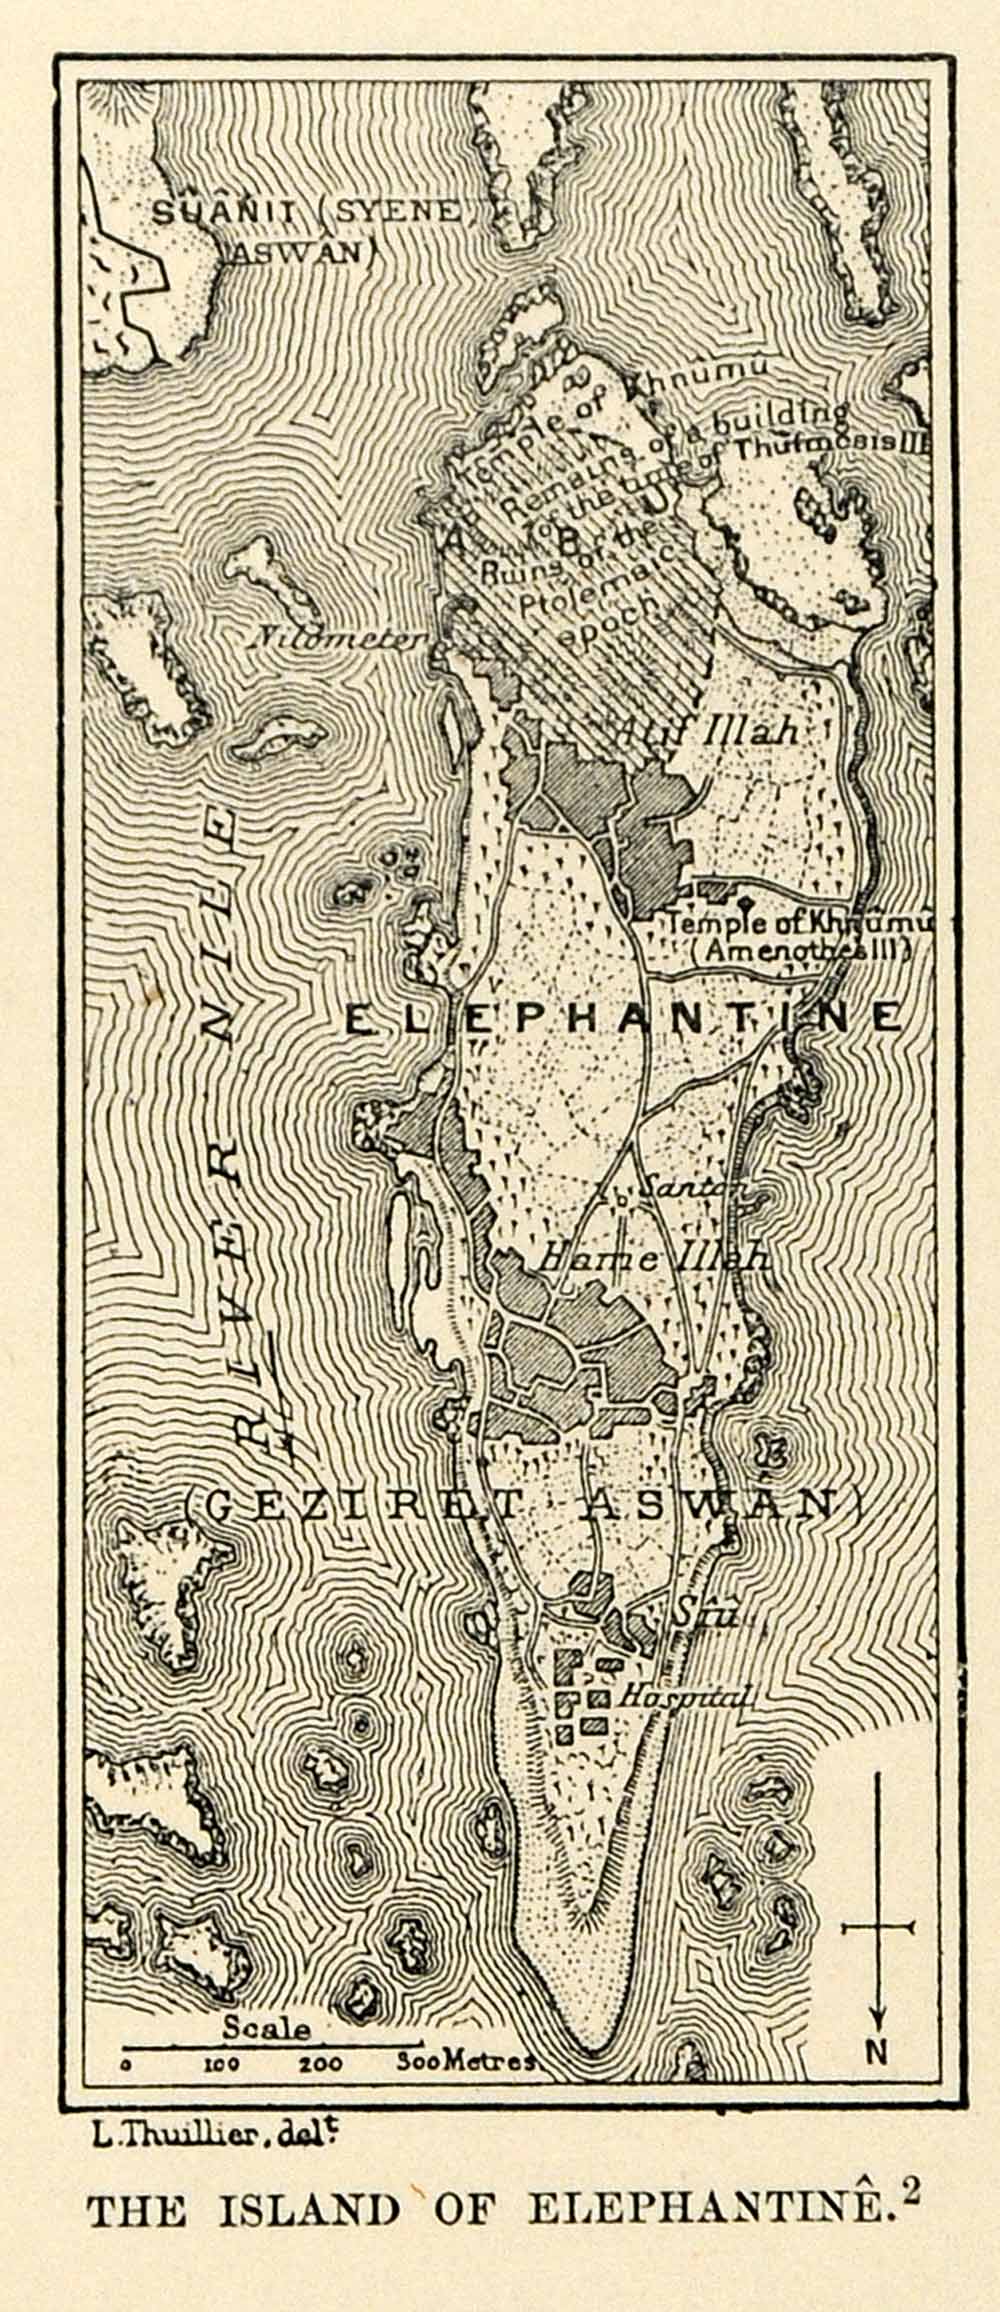 1903 Print Elephantine Thuillier Geziret Aswan Nubia Egypt Nile River Map XHA3